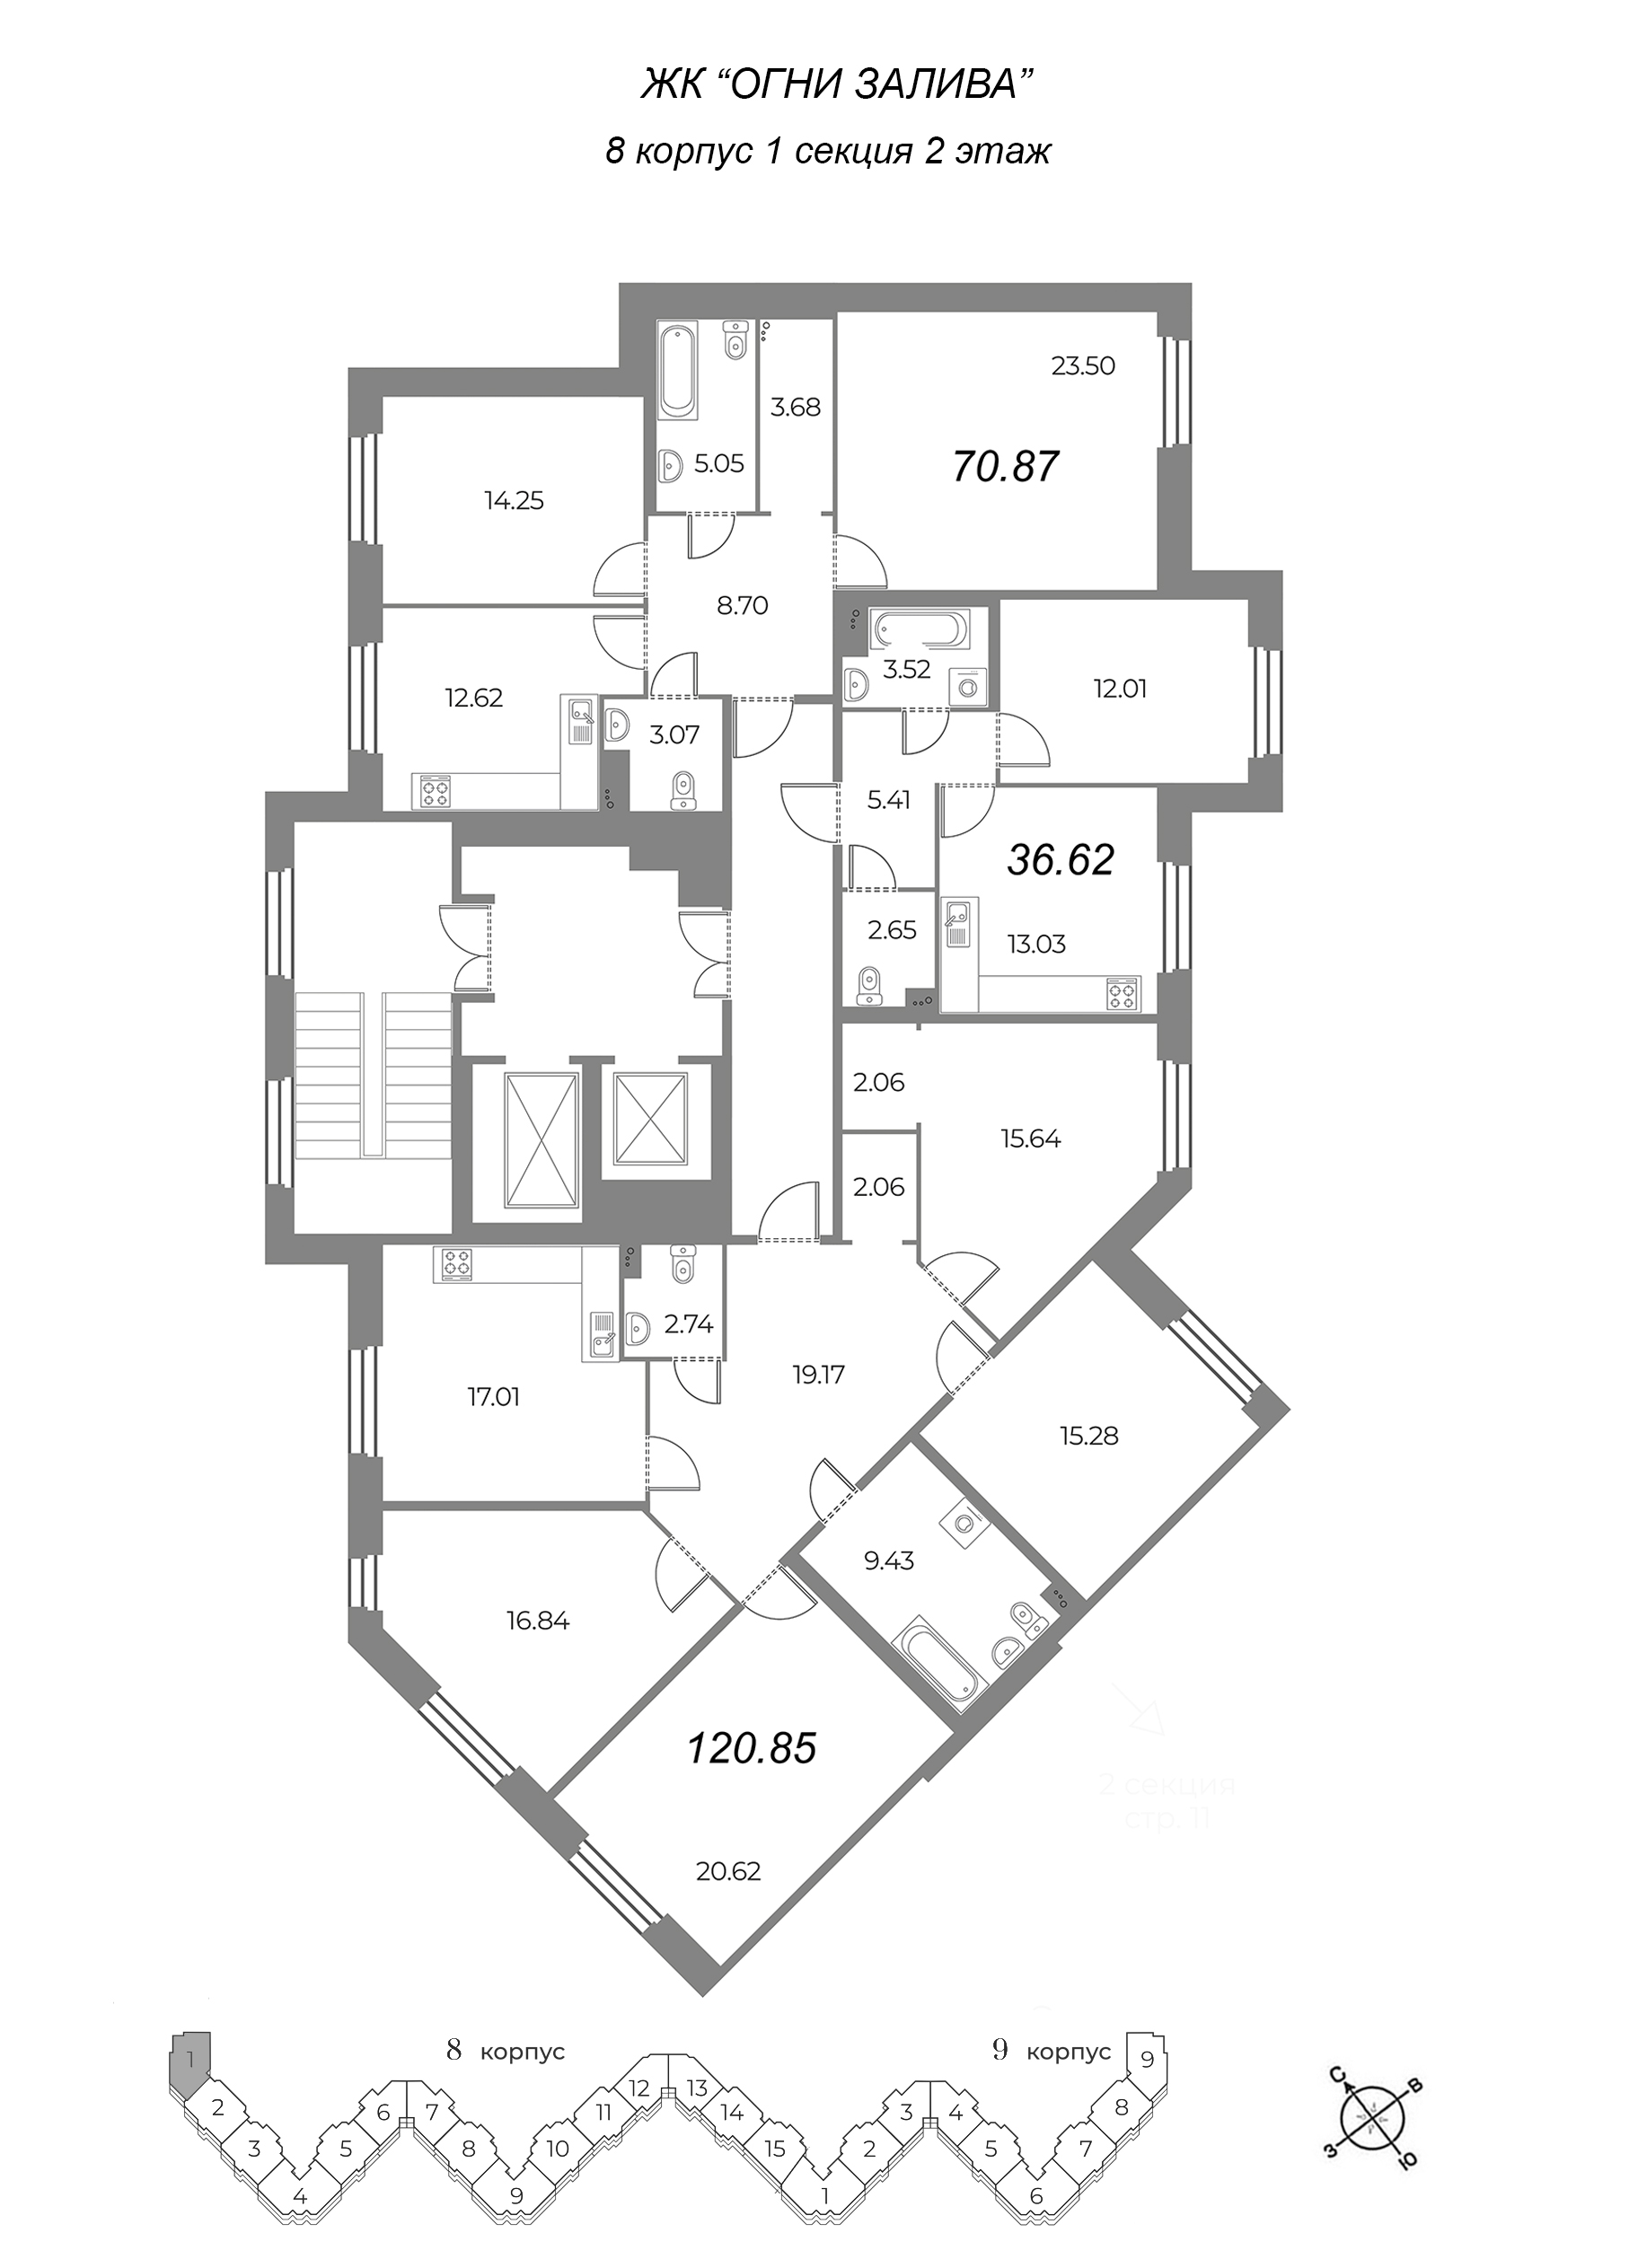 5-комнатная (Евро) квартира, 120.85 м² - планировка этажа